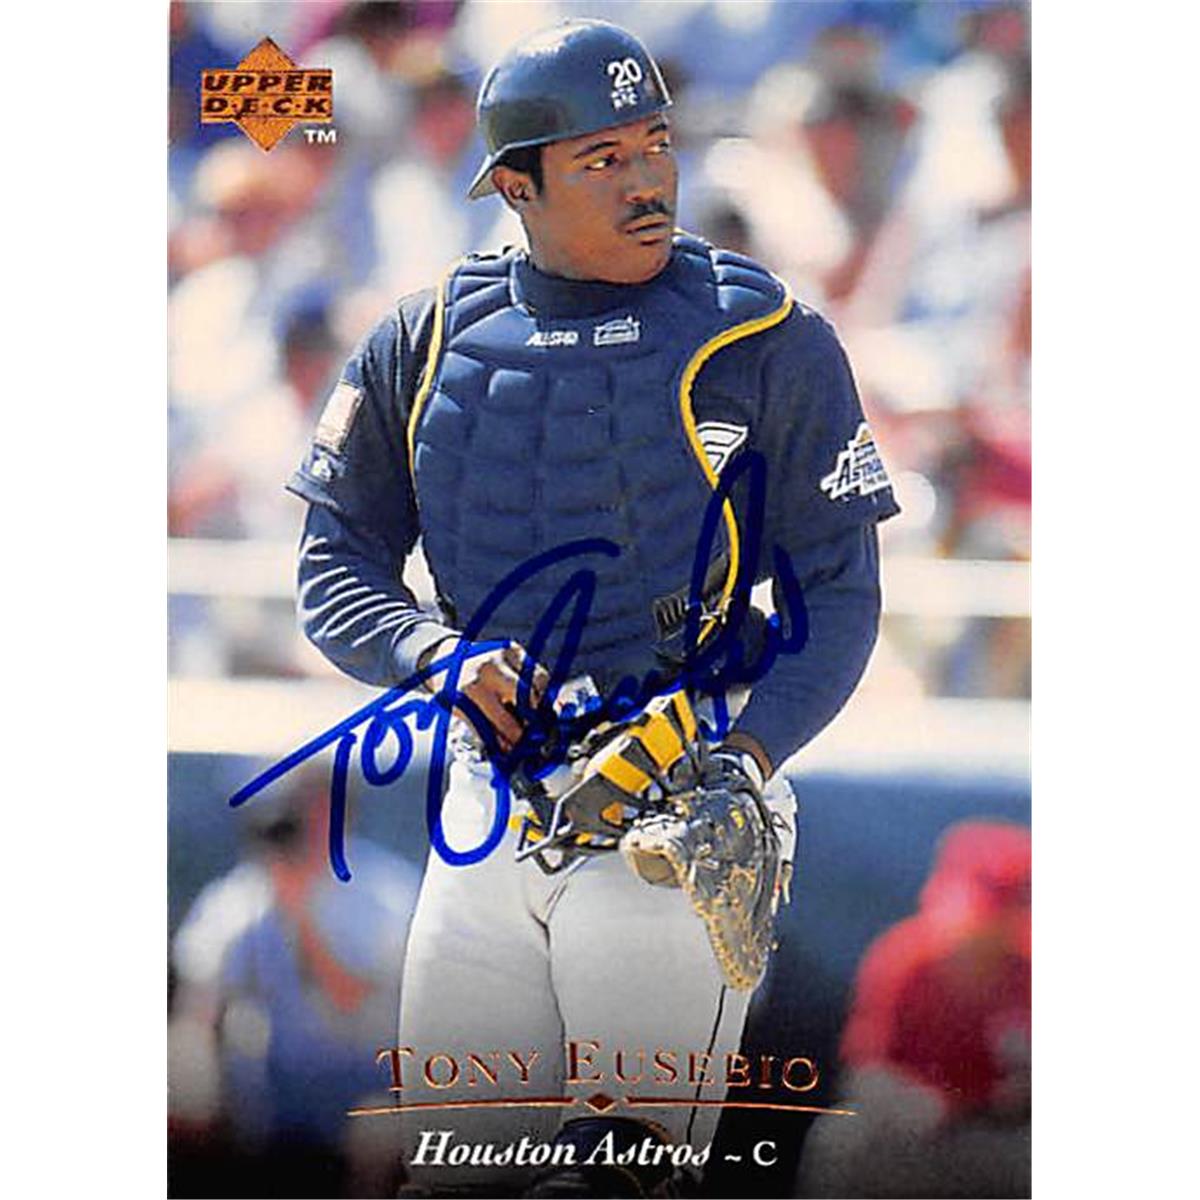 Autograph Warehouse 344035 Tony Eusebio Autographed Baseball Card - Houston Astros&#44; FT 1995 Upper Deck No. 24